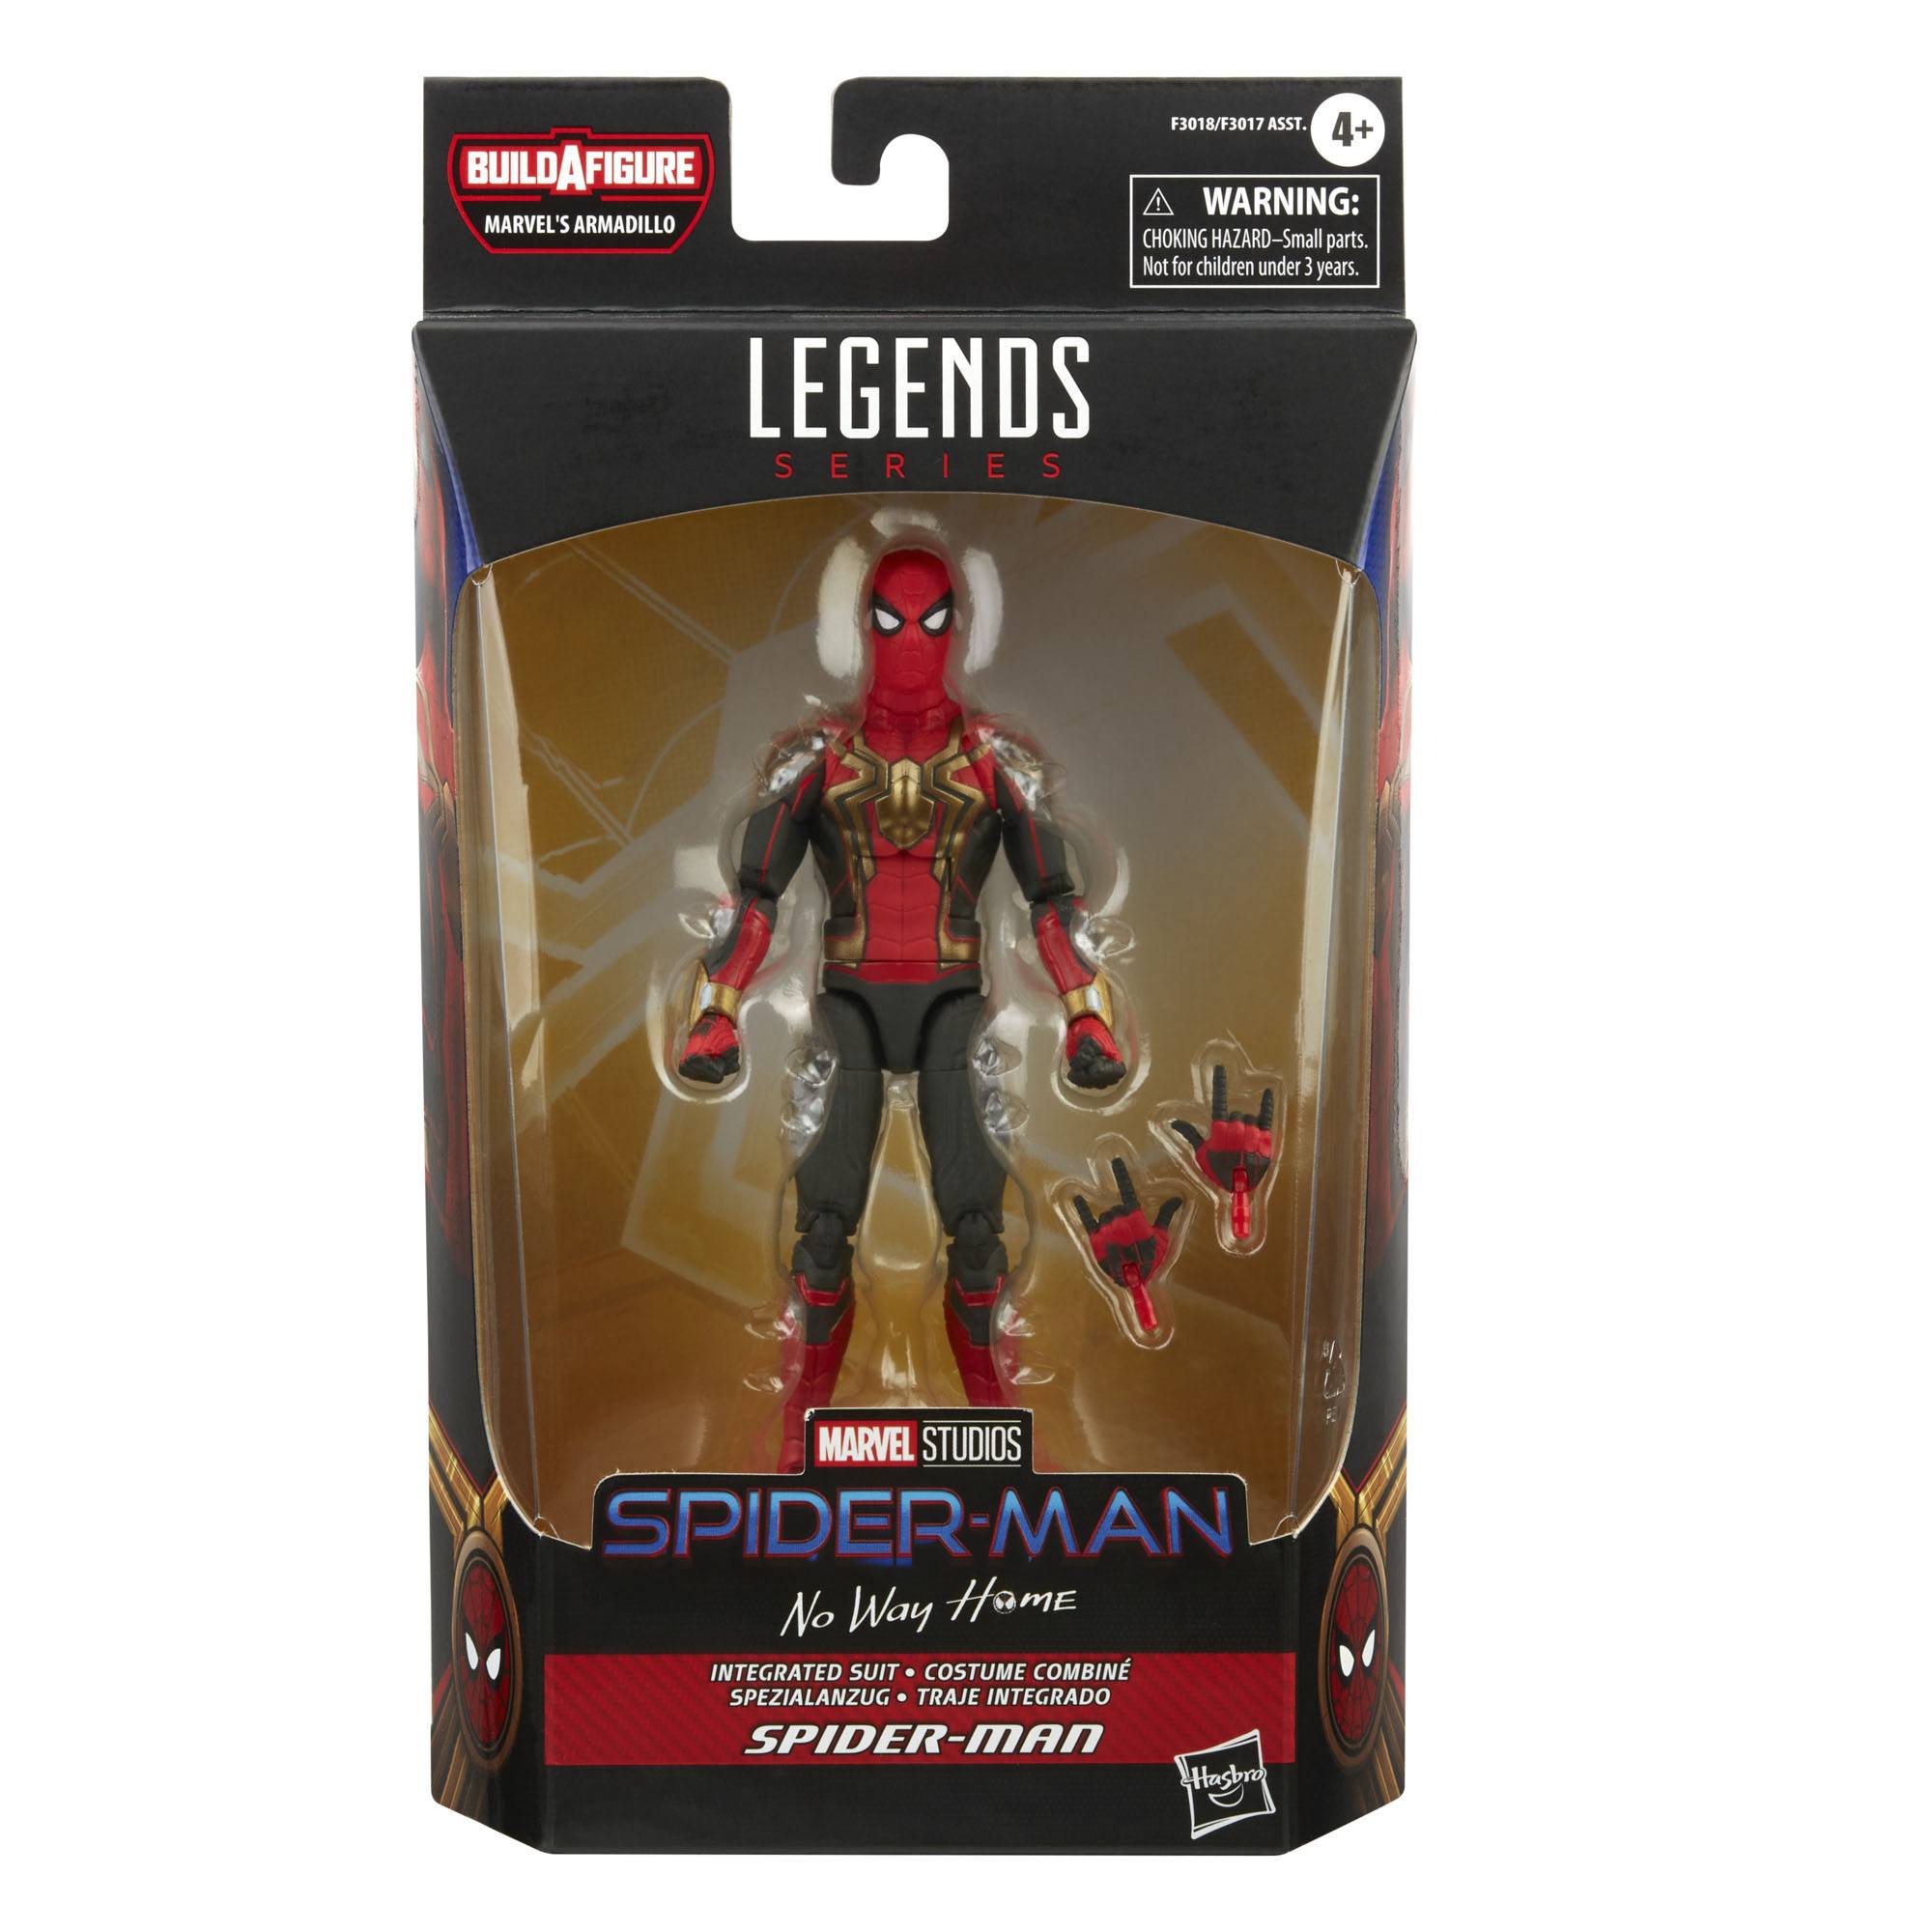 Spider-Man Marvel Legends Series Actionfigur (Integrated Suit) (Spider-Man: No Way Home) F30175L00 5010993846887